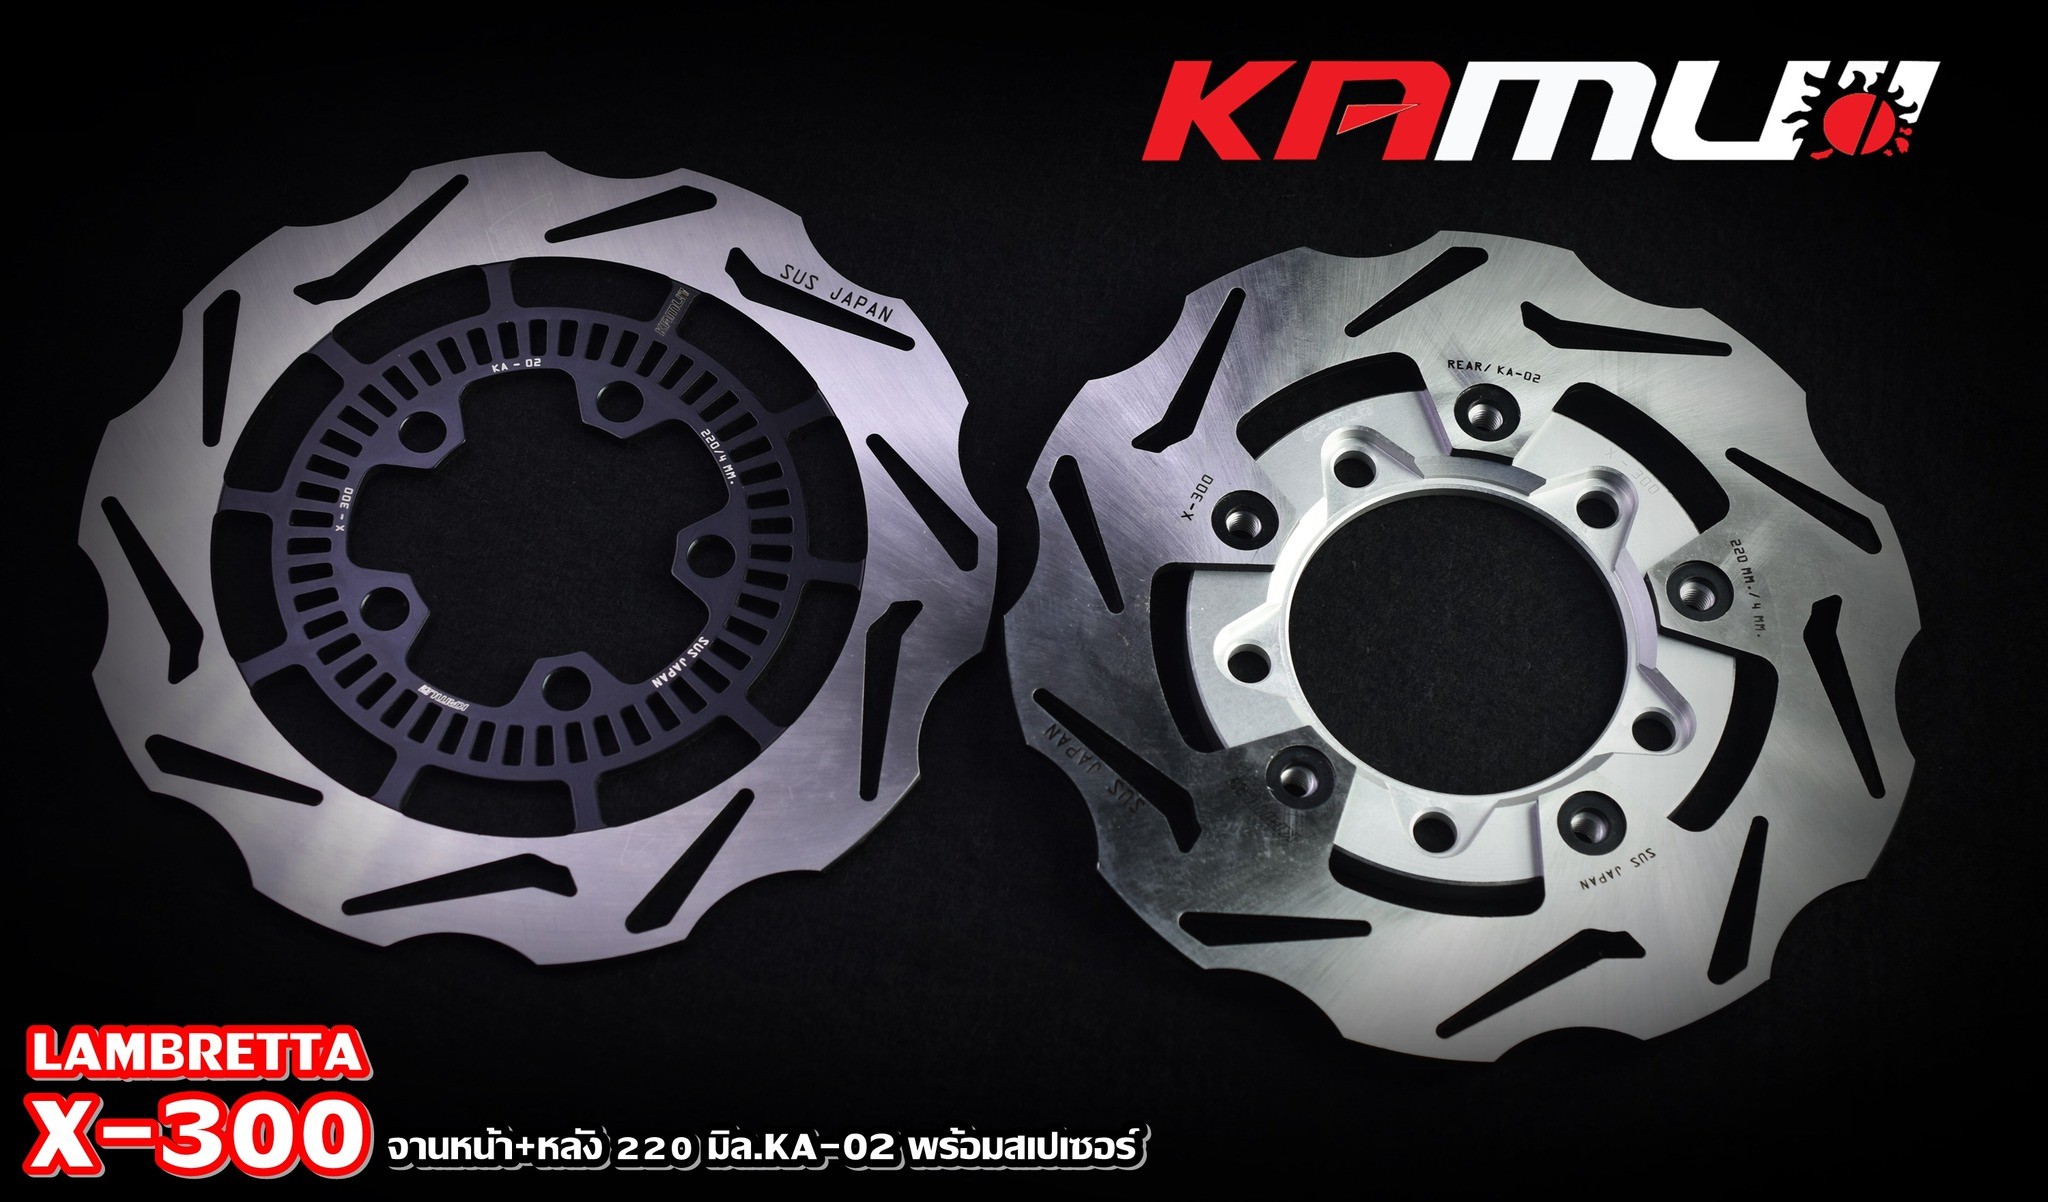 Front + Rear Disc Brake 1 Set KAMUI 220mm. For Lambretta X-300